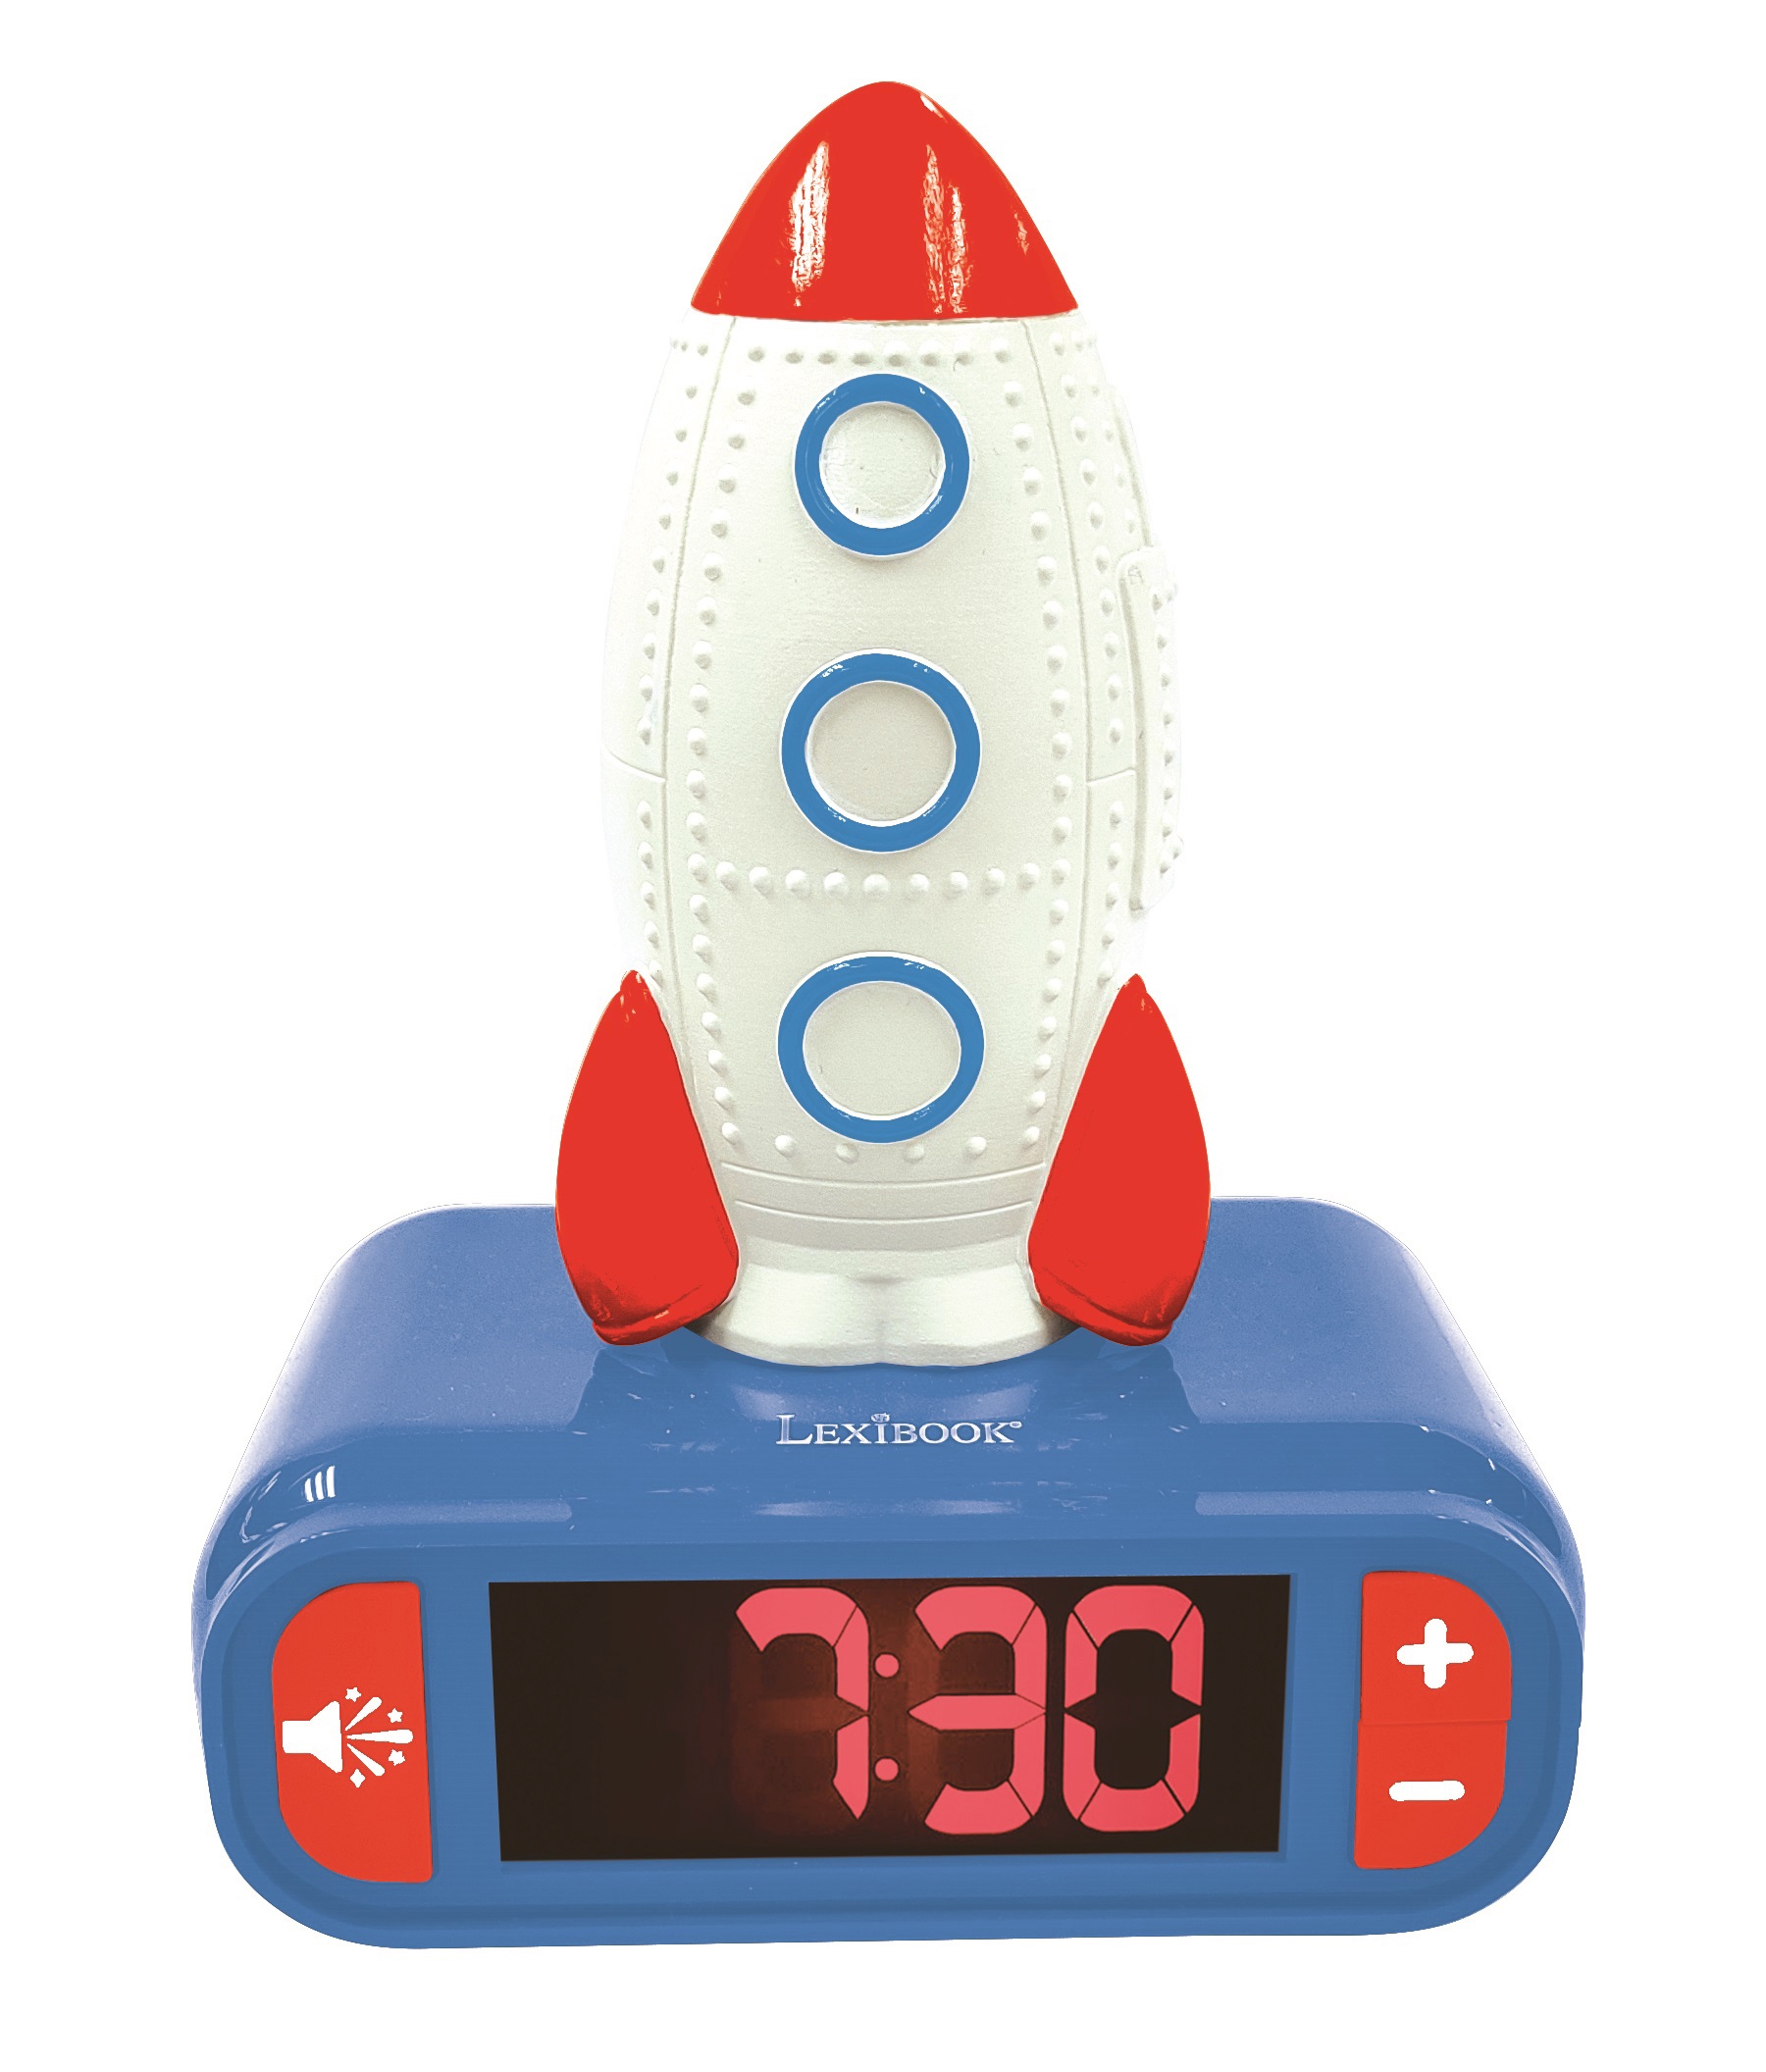 Lexibook Rocket Digital Alarm Clock and Nightlight